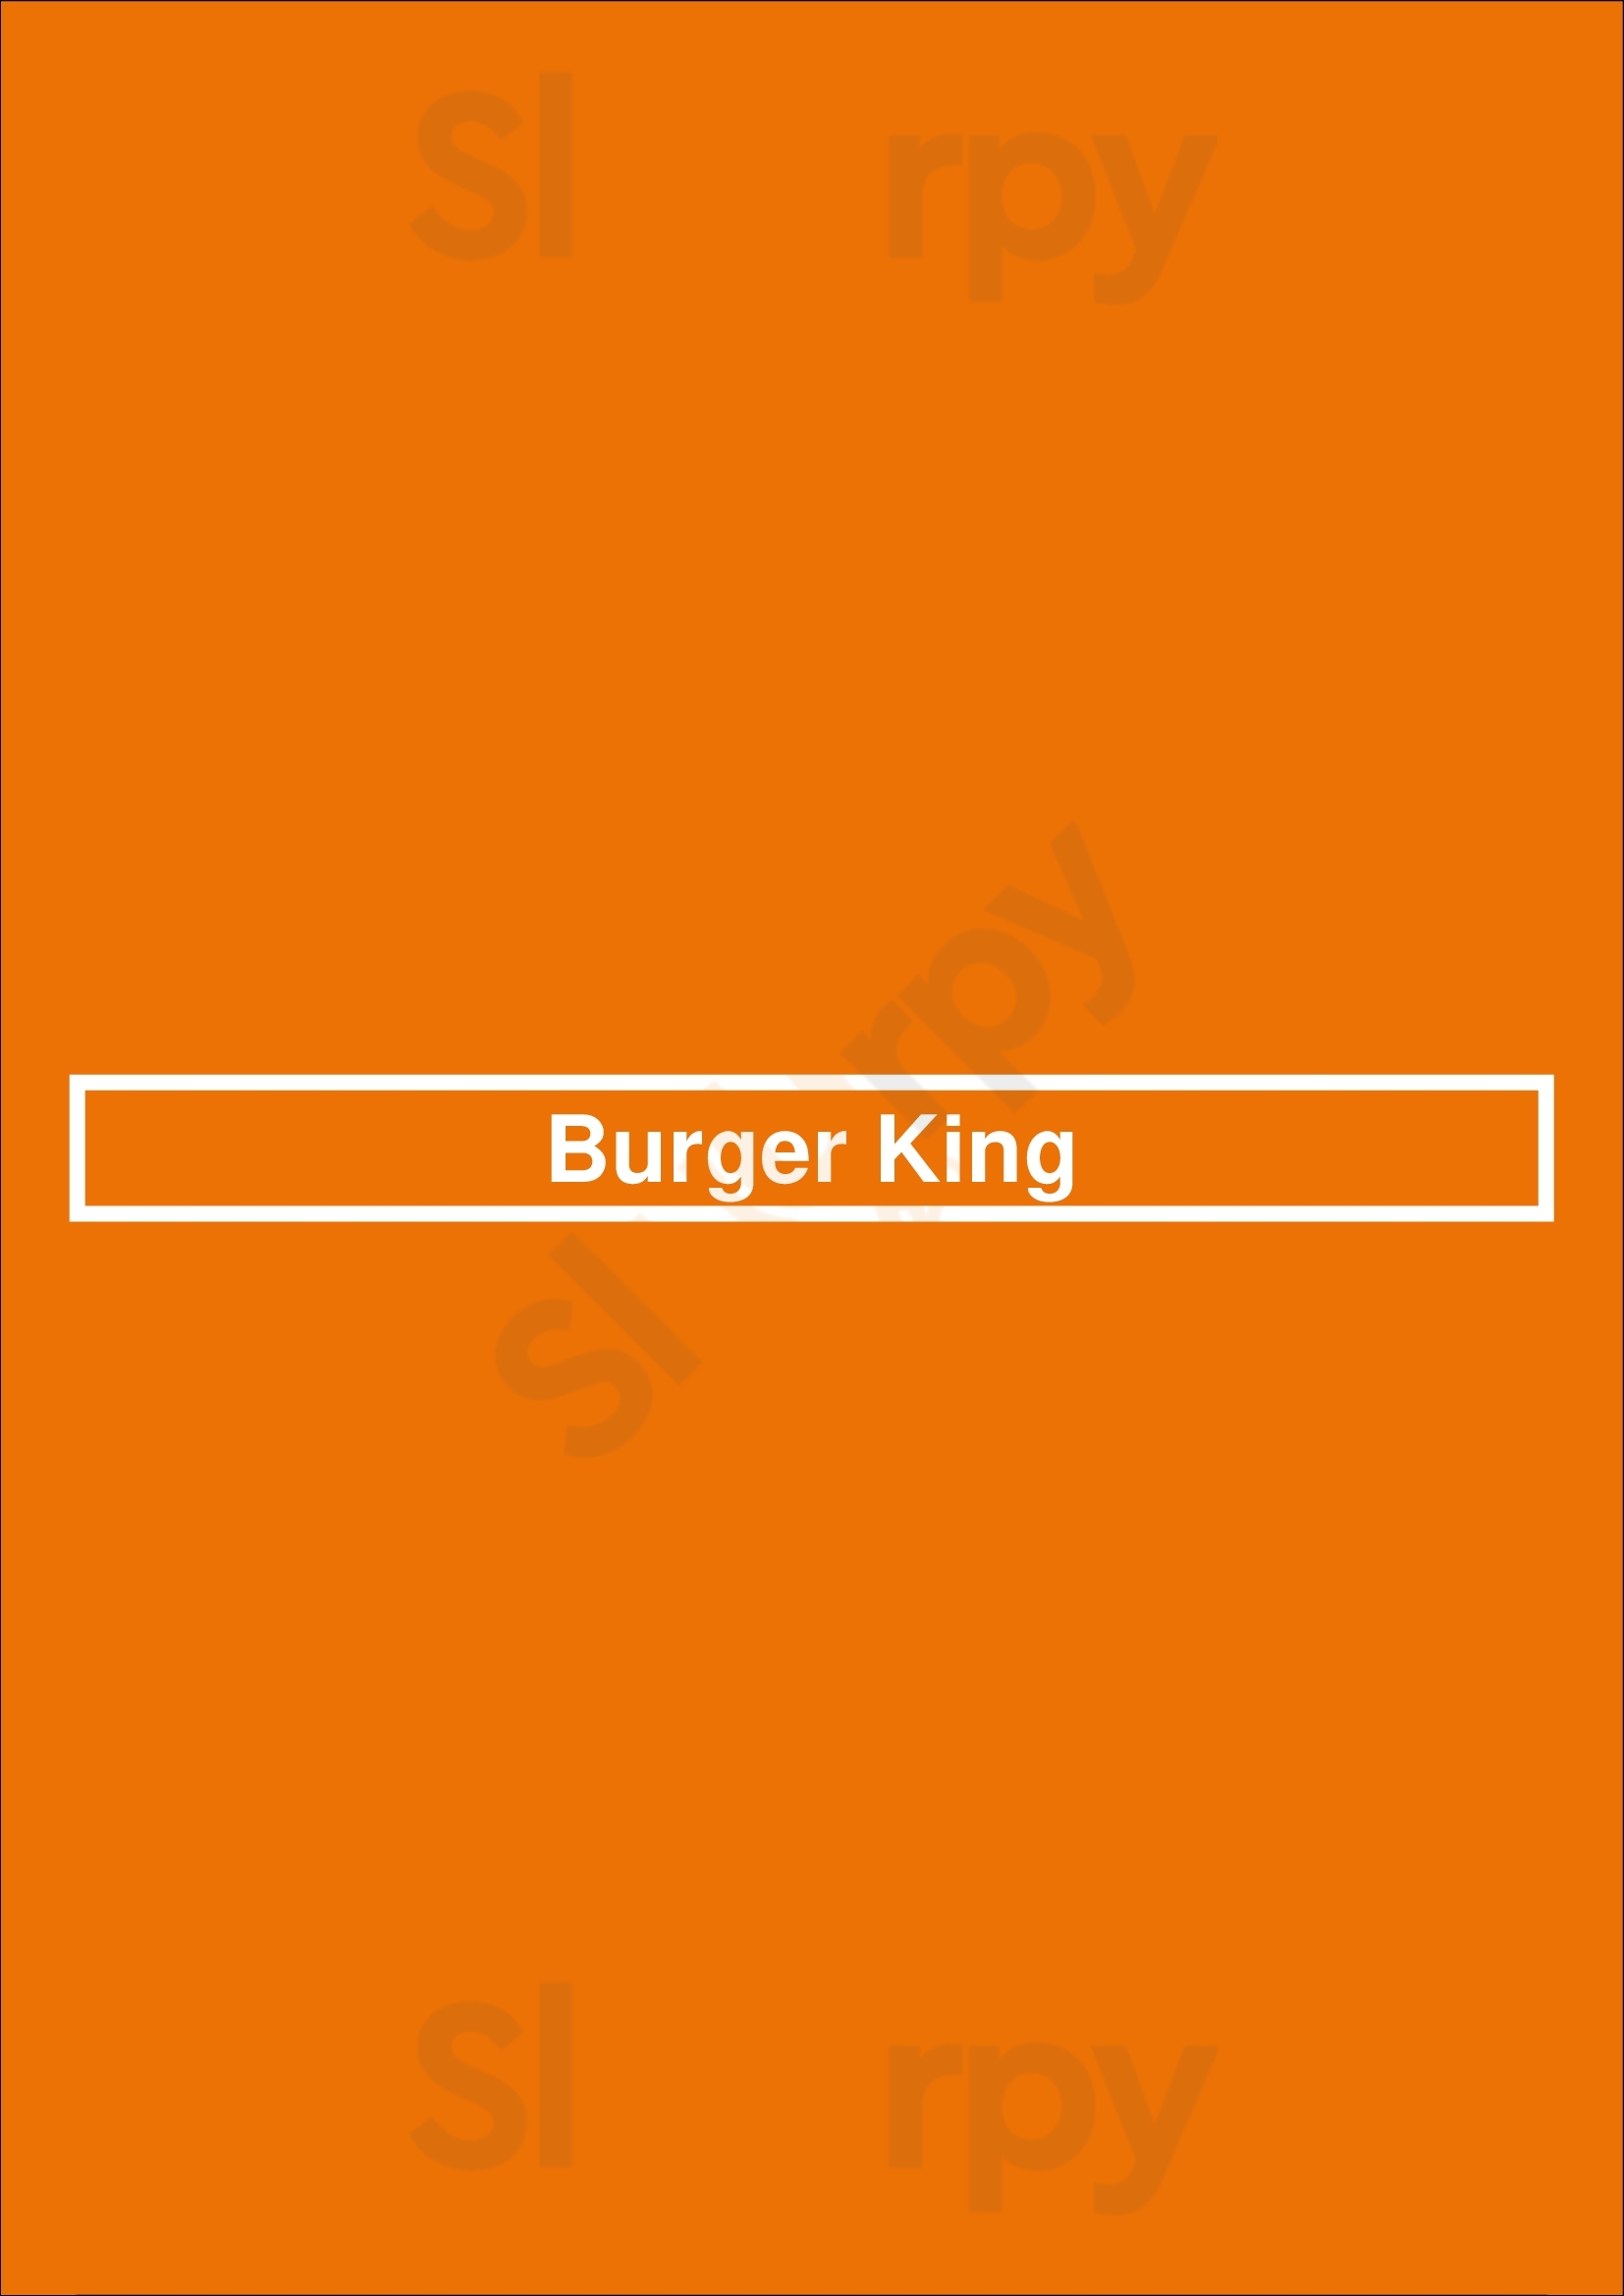 Burger King Tucson Menu - 1